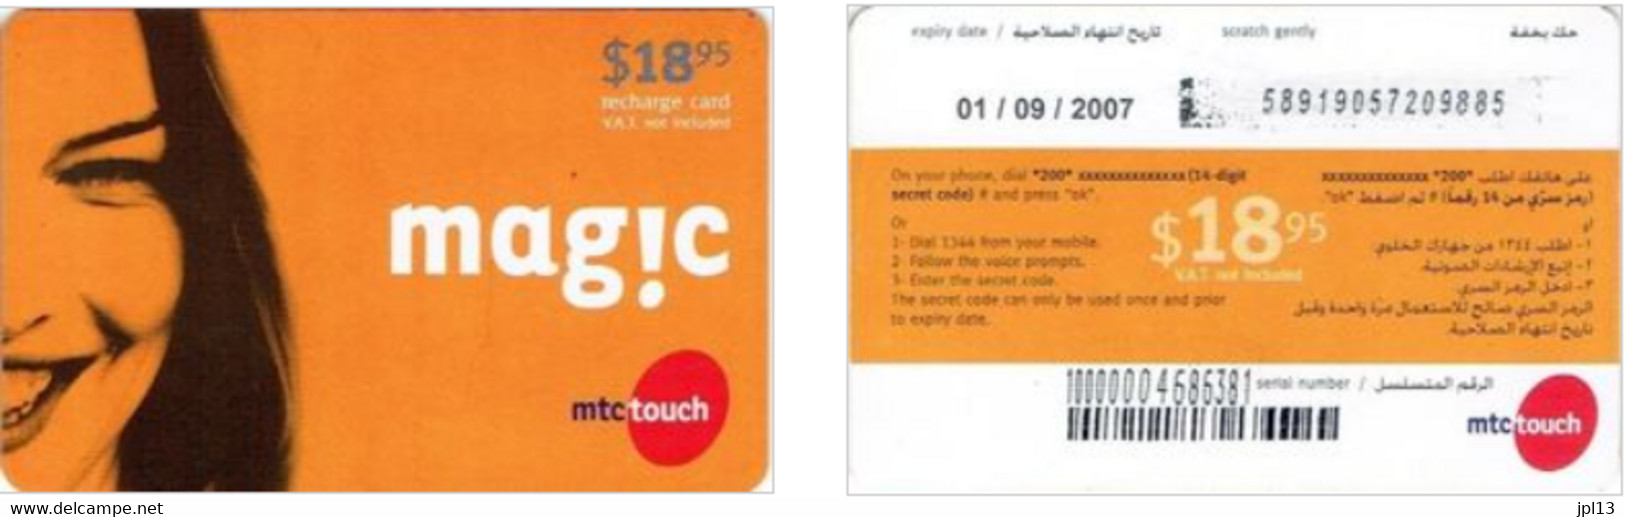 Recharge GSM - Liban - MTC Touch - Magic - Woman $18,95, Exp. 01/06/2007 - Lebanon